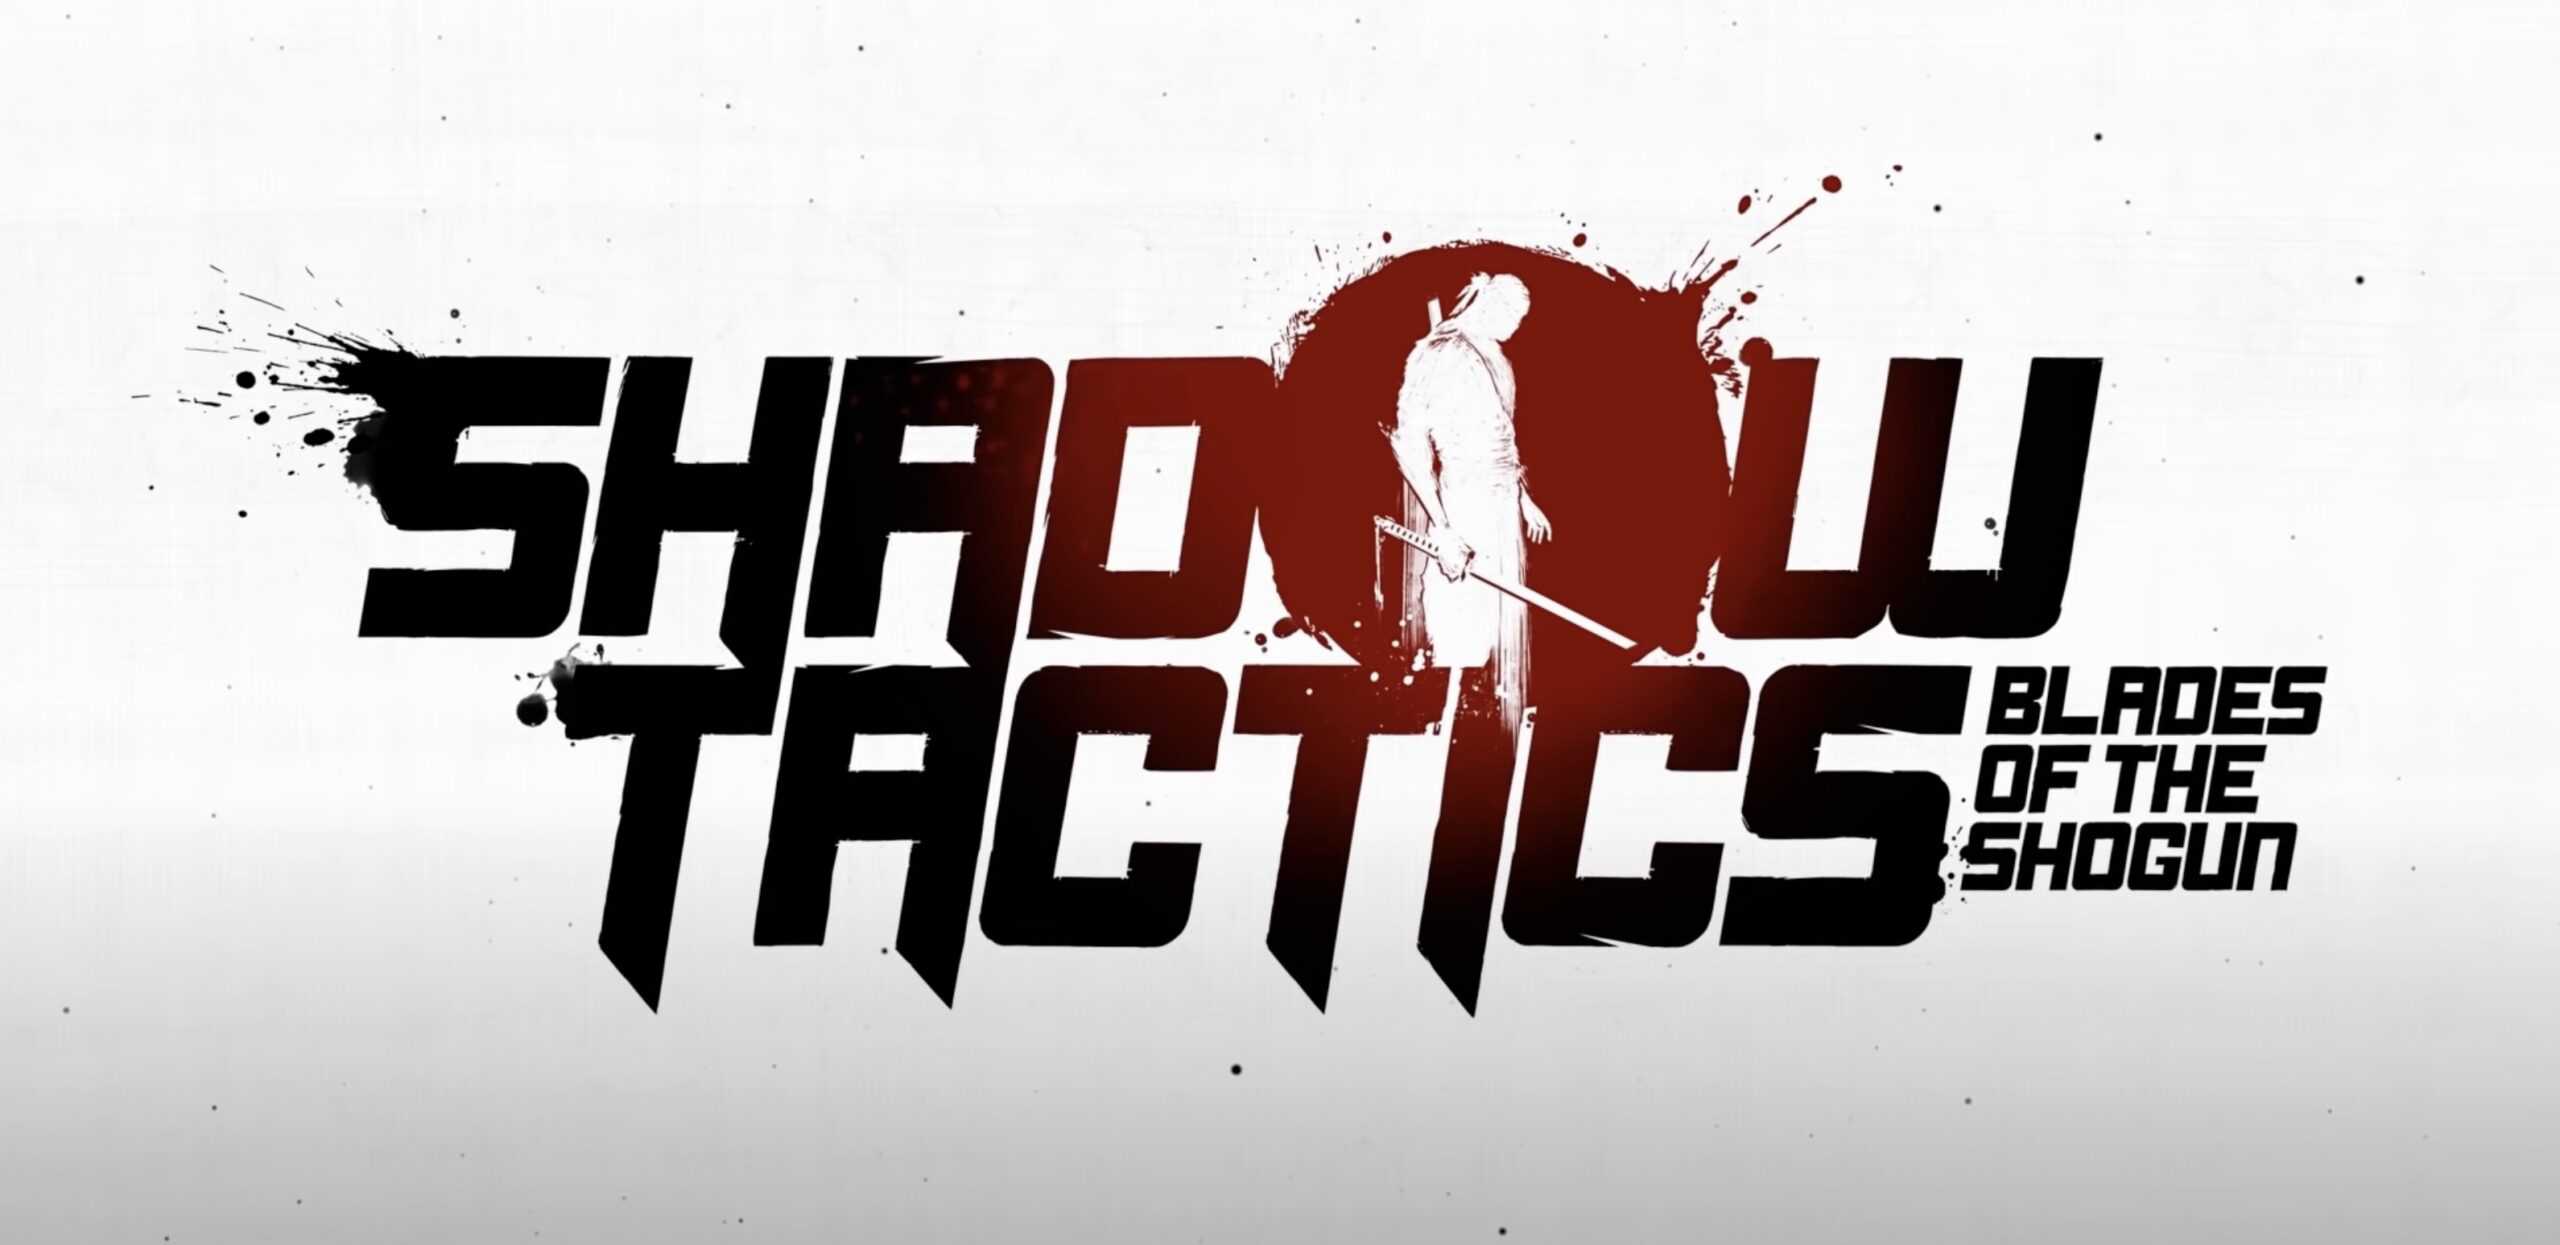 Shadow Tactics: Blades of the Shogun logo